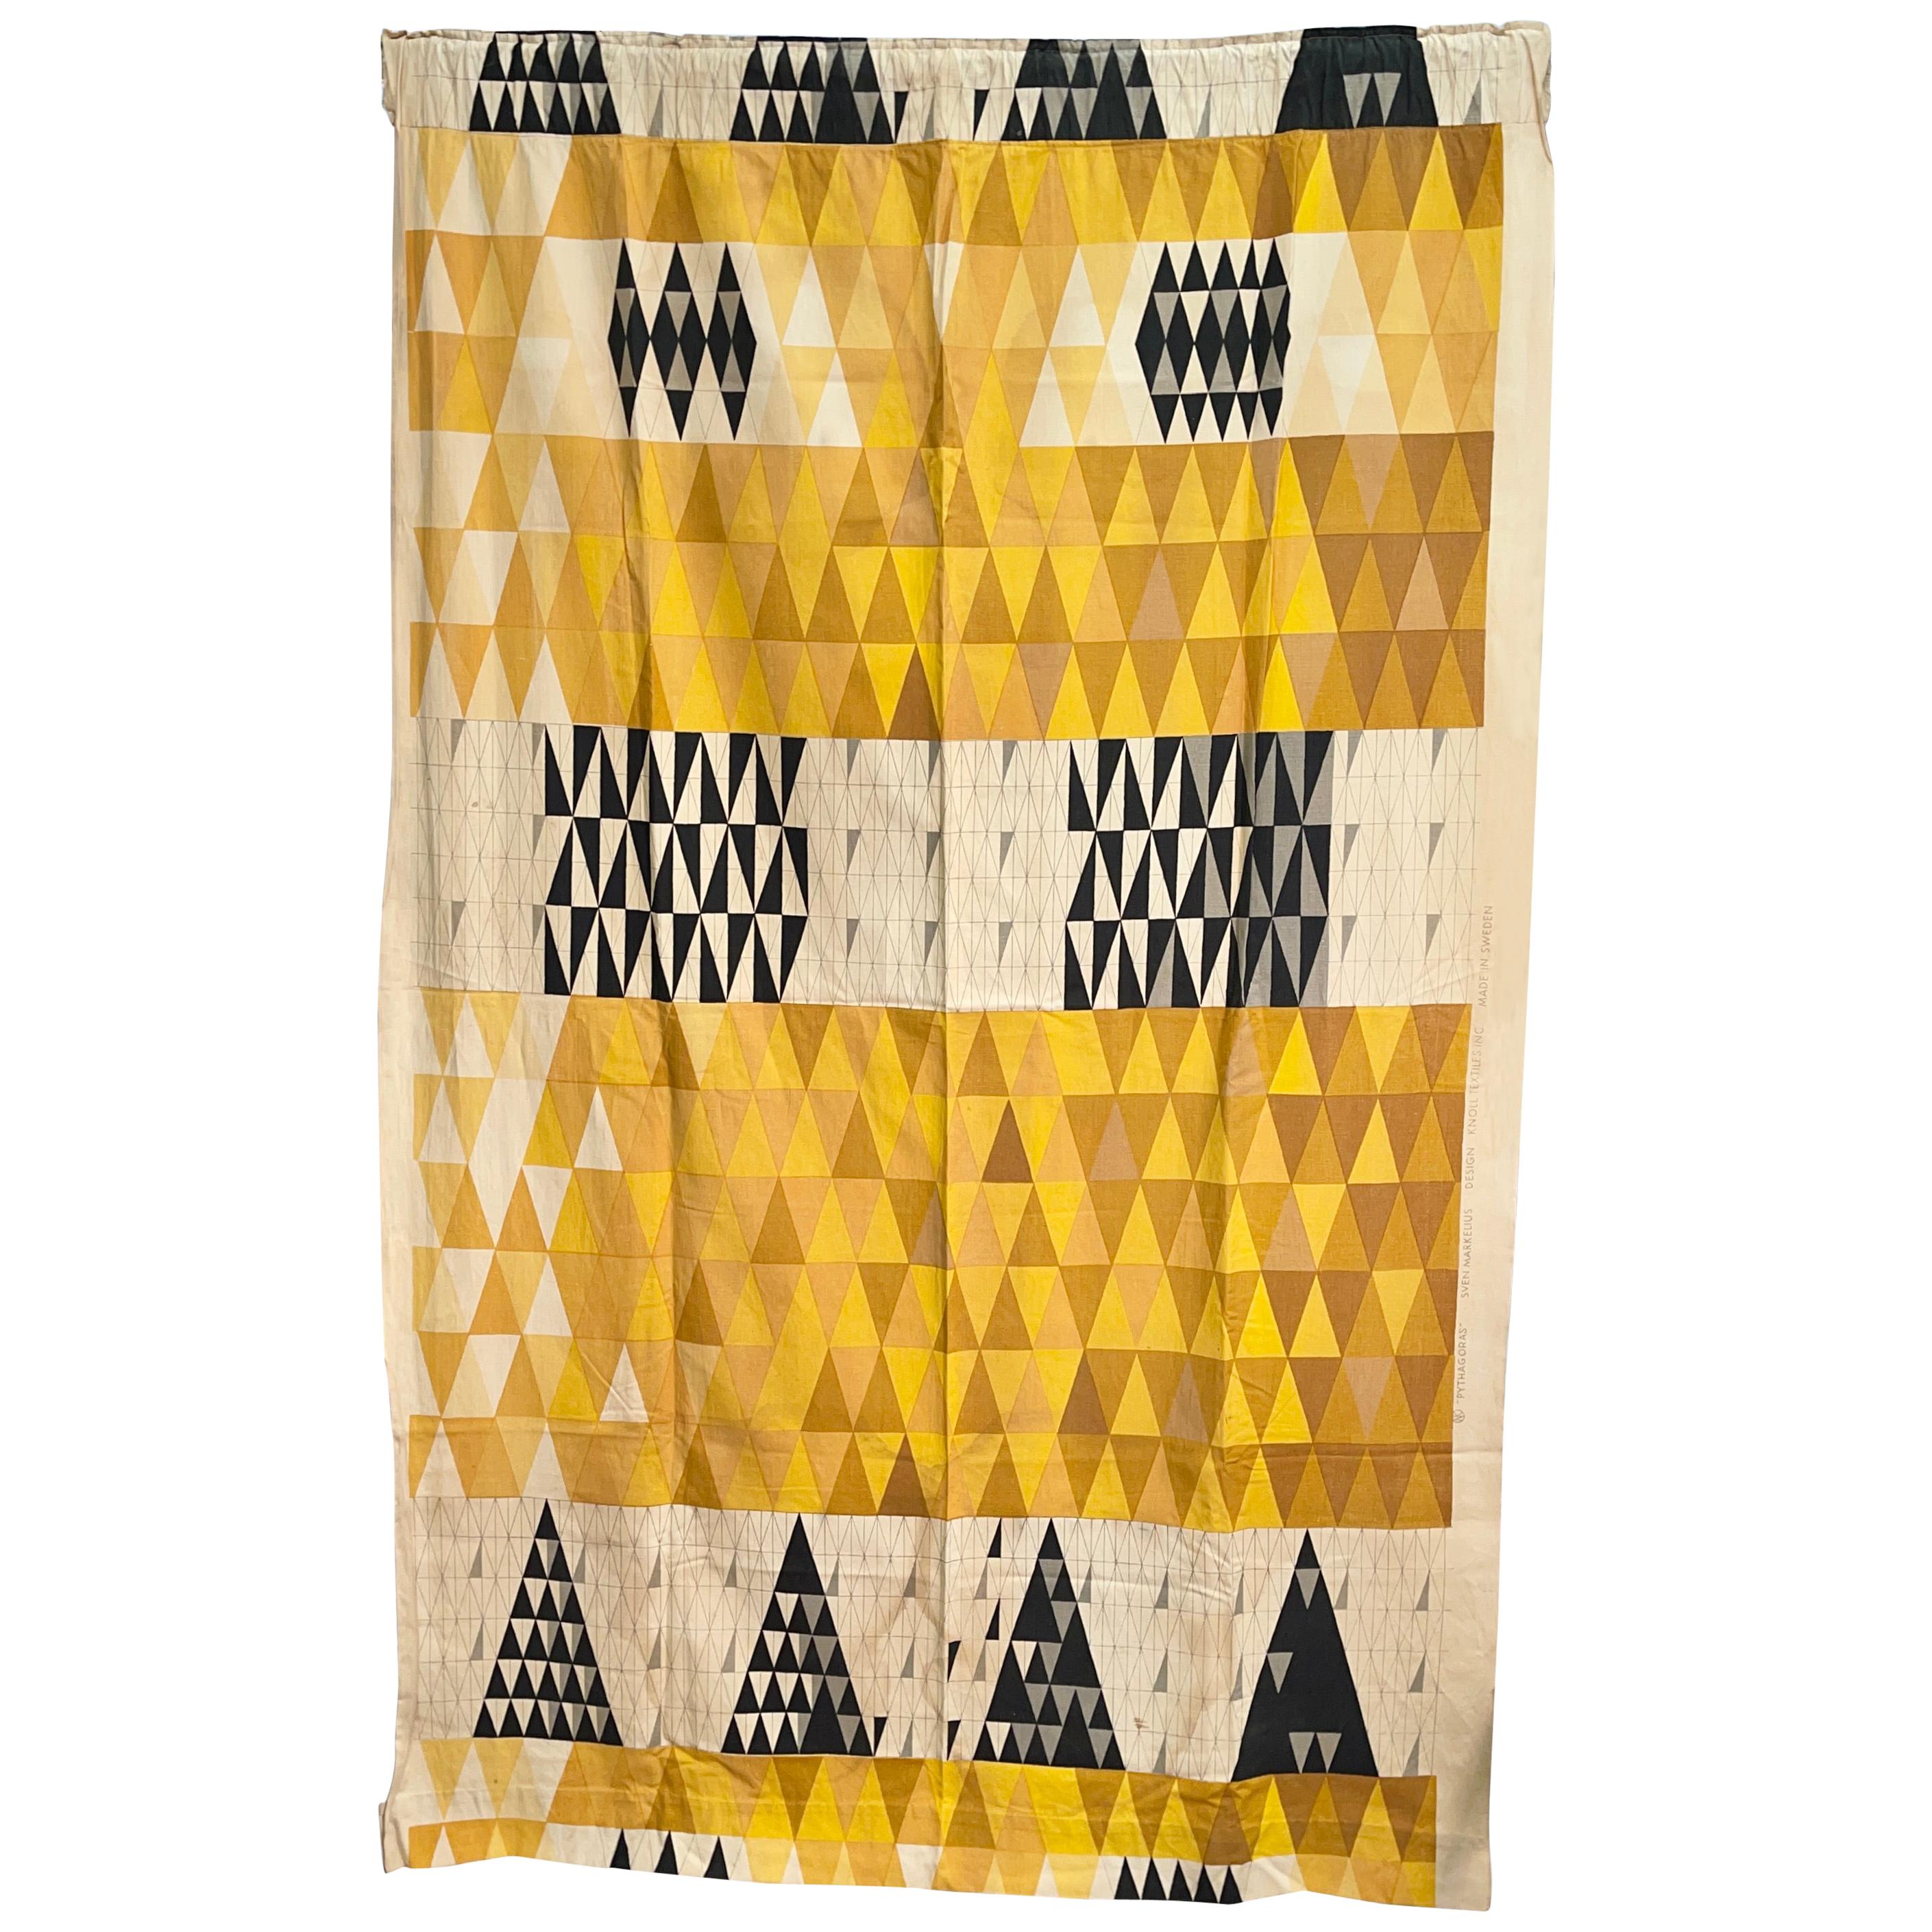 Sven Markelius "Pythagoras" for Knoll Textiles Drapery Panel For Sale